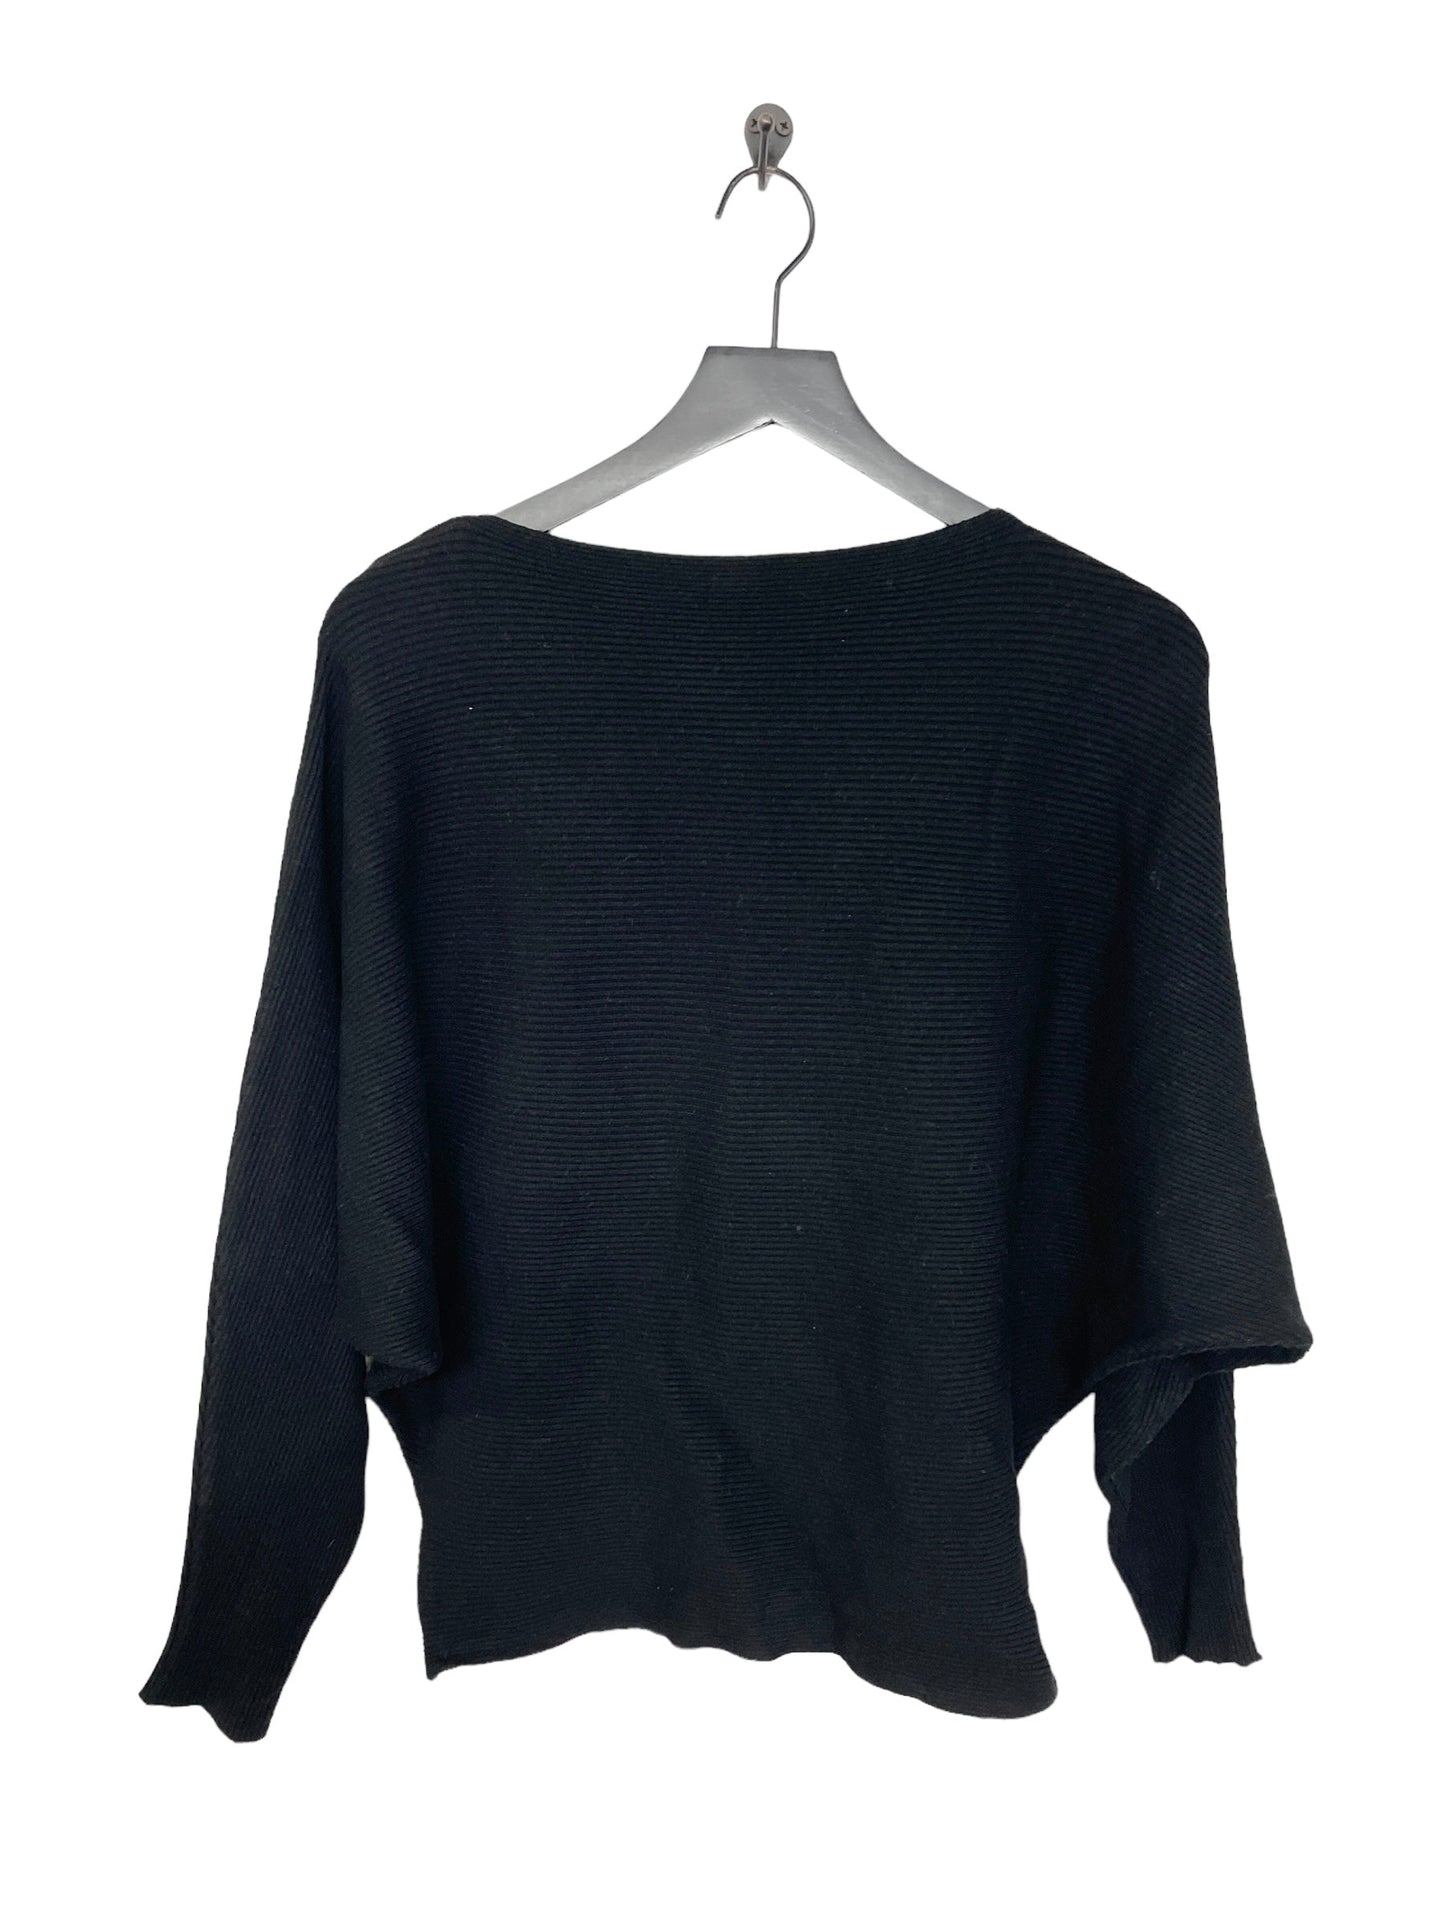 Black Sweater Cme, Size M